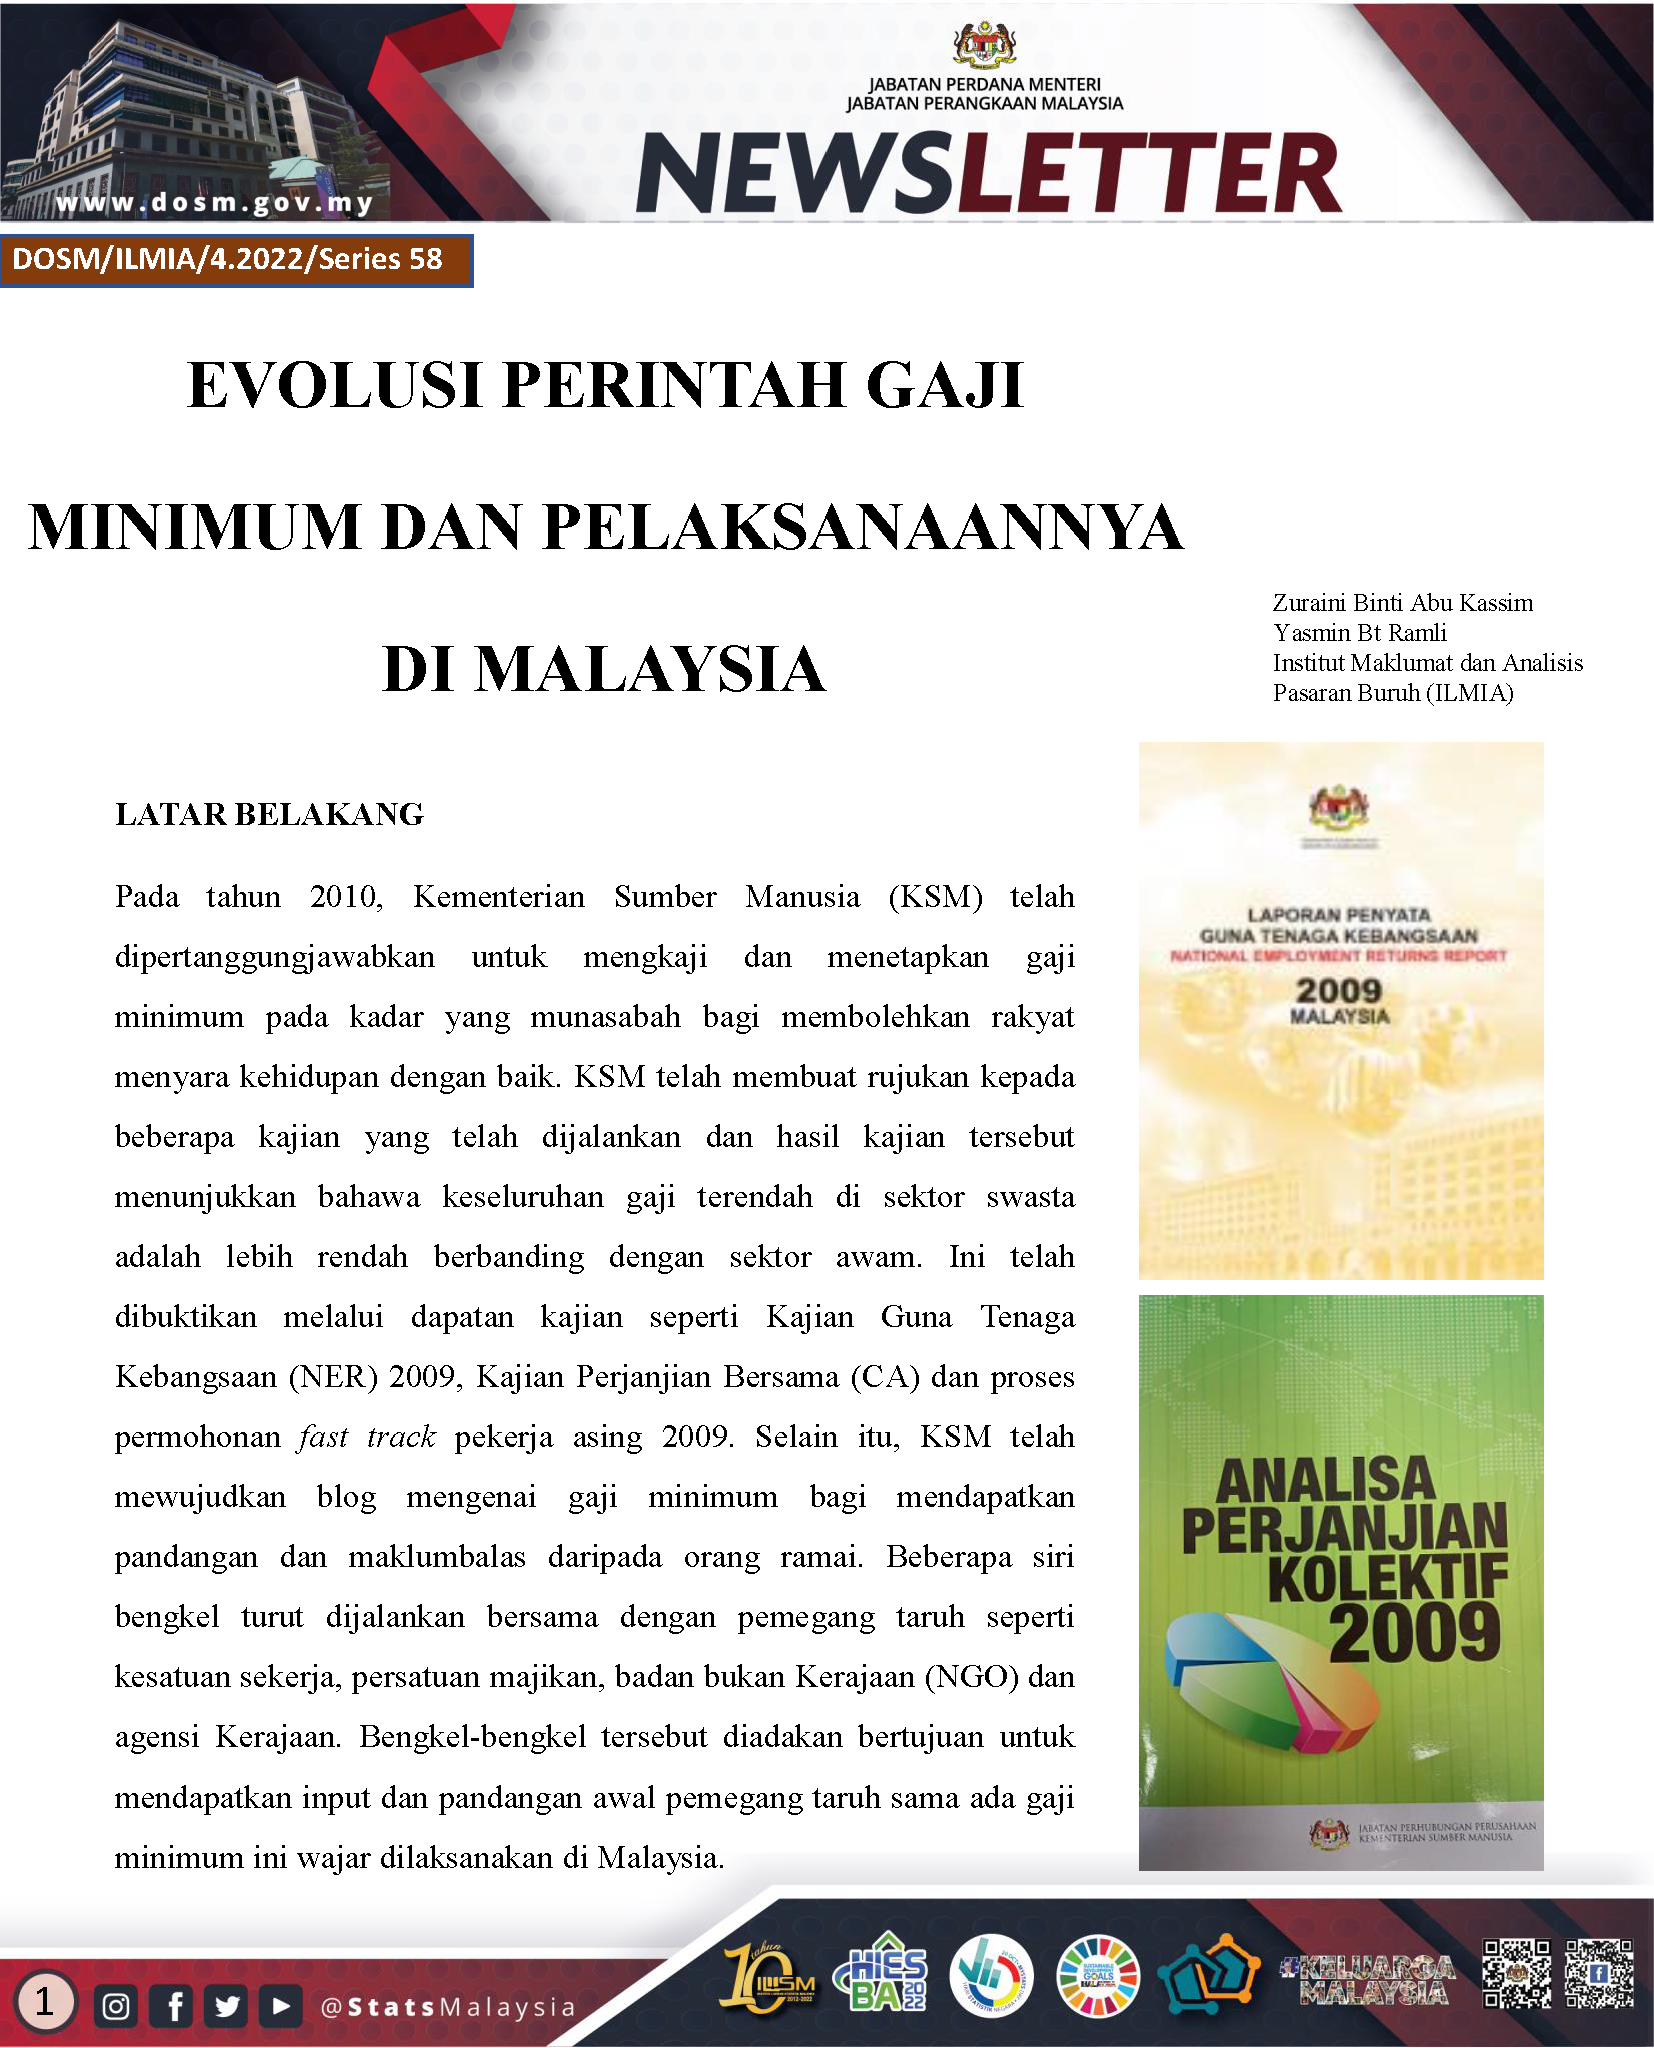 Evolusi Perintah Gaji Minimum Dan Pelaksanaannya Di Malaysia